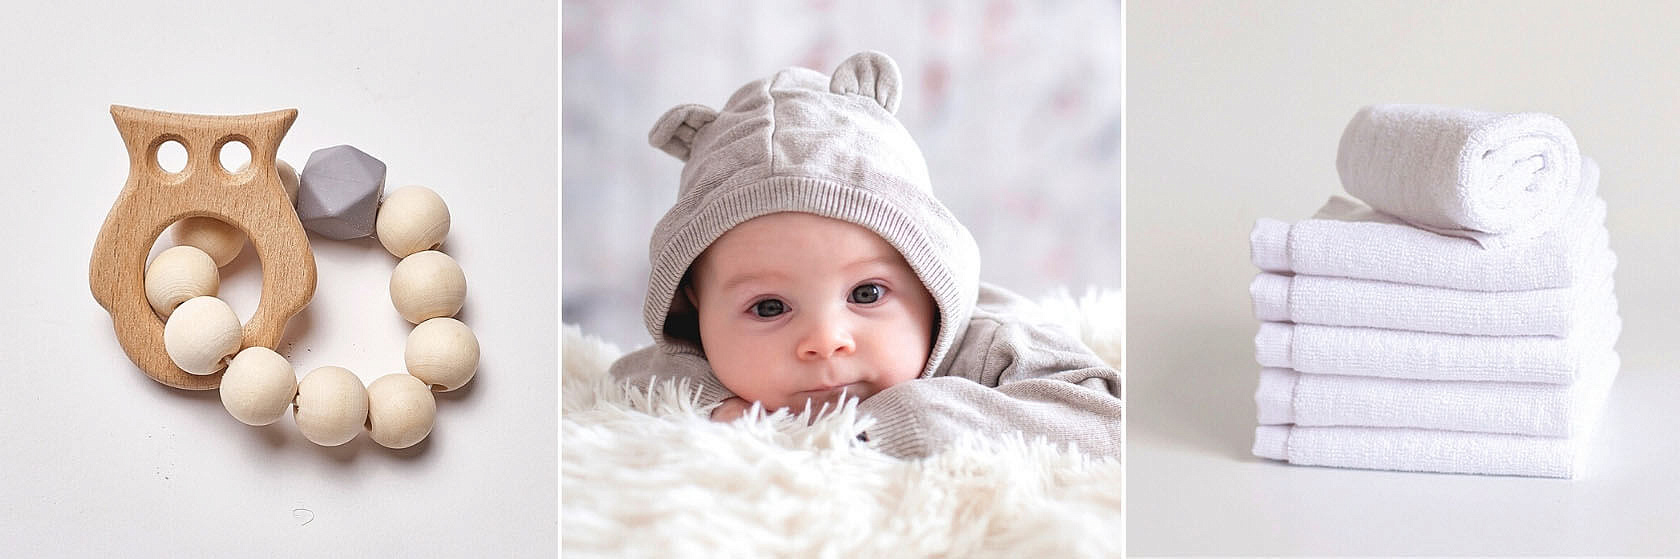 Что такое молочница во рту у младенцев?